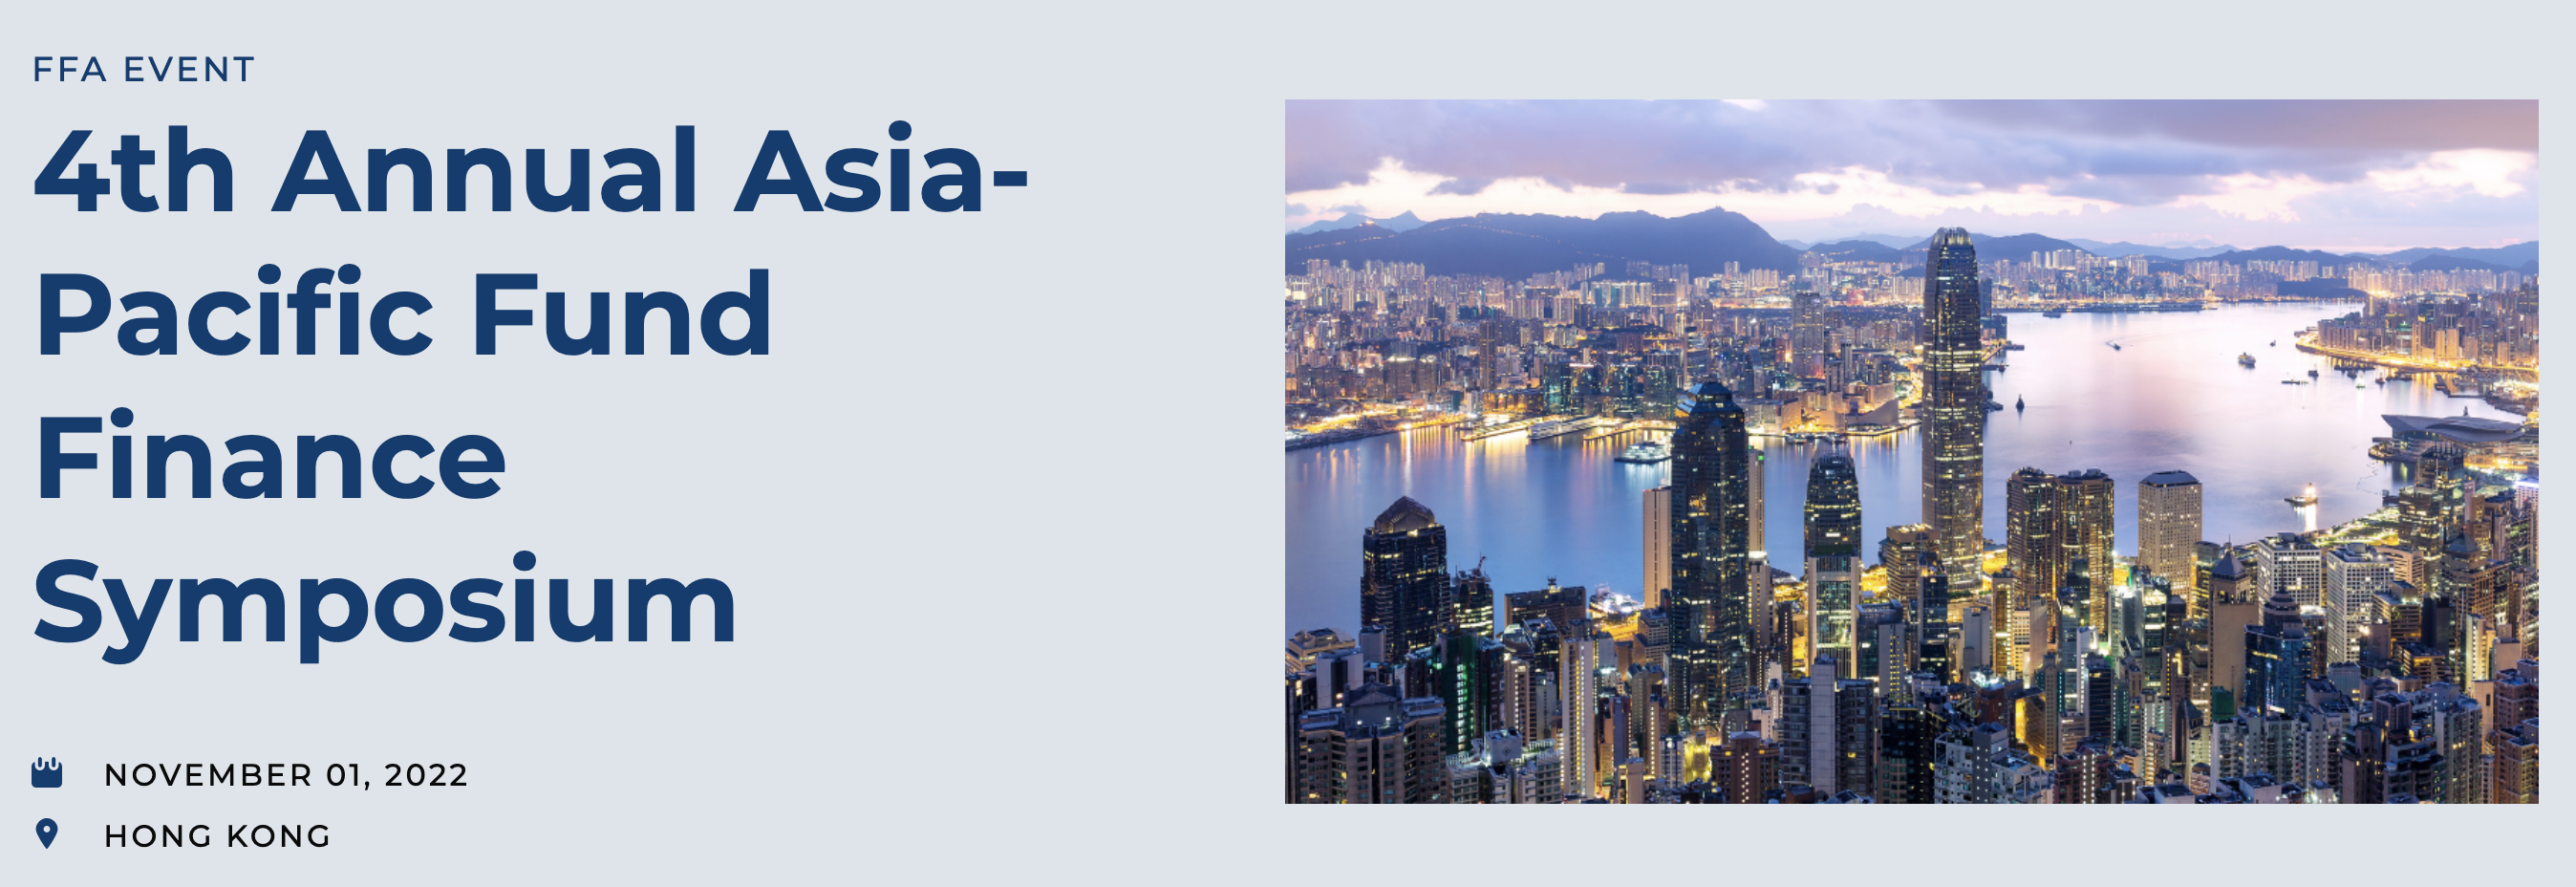 4th Annual Asia-Pacific Fund Finance Symposium